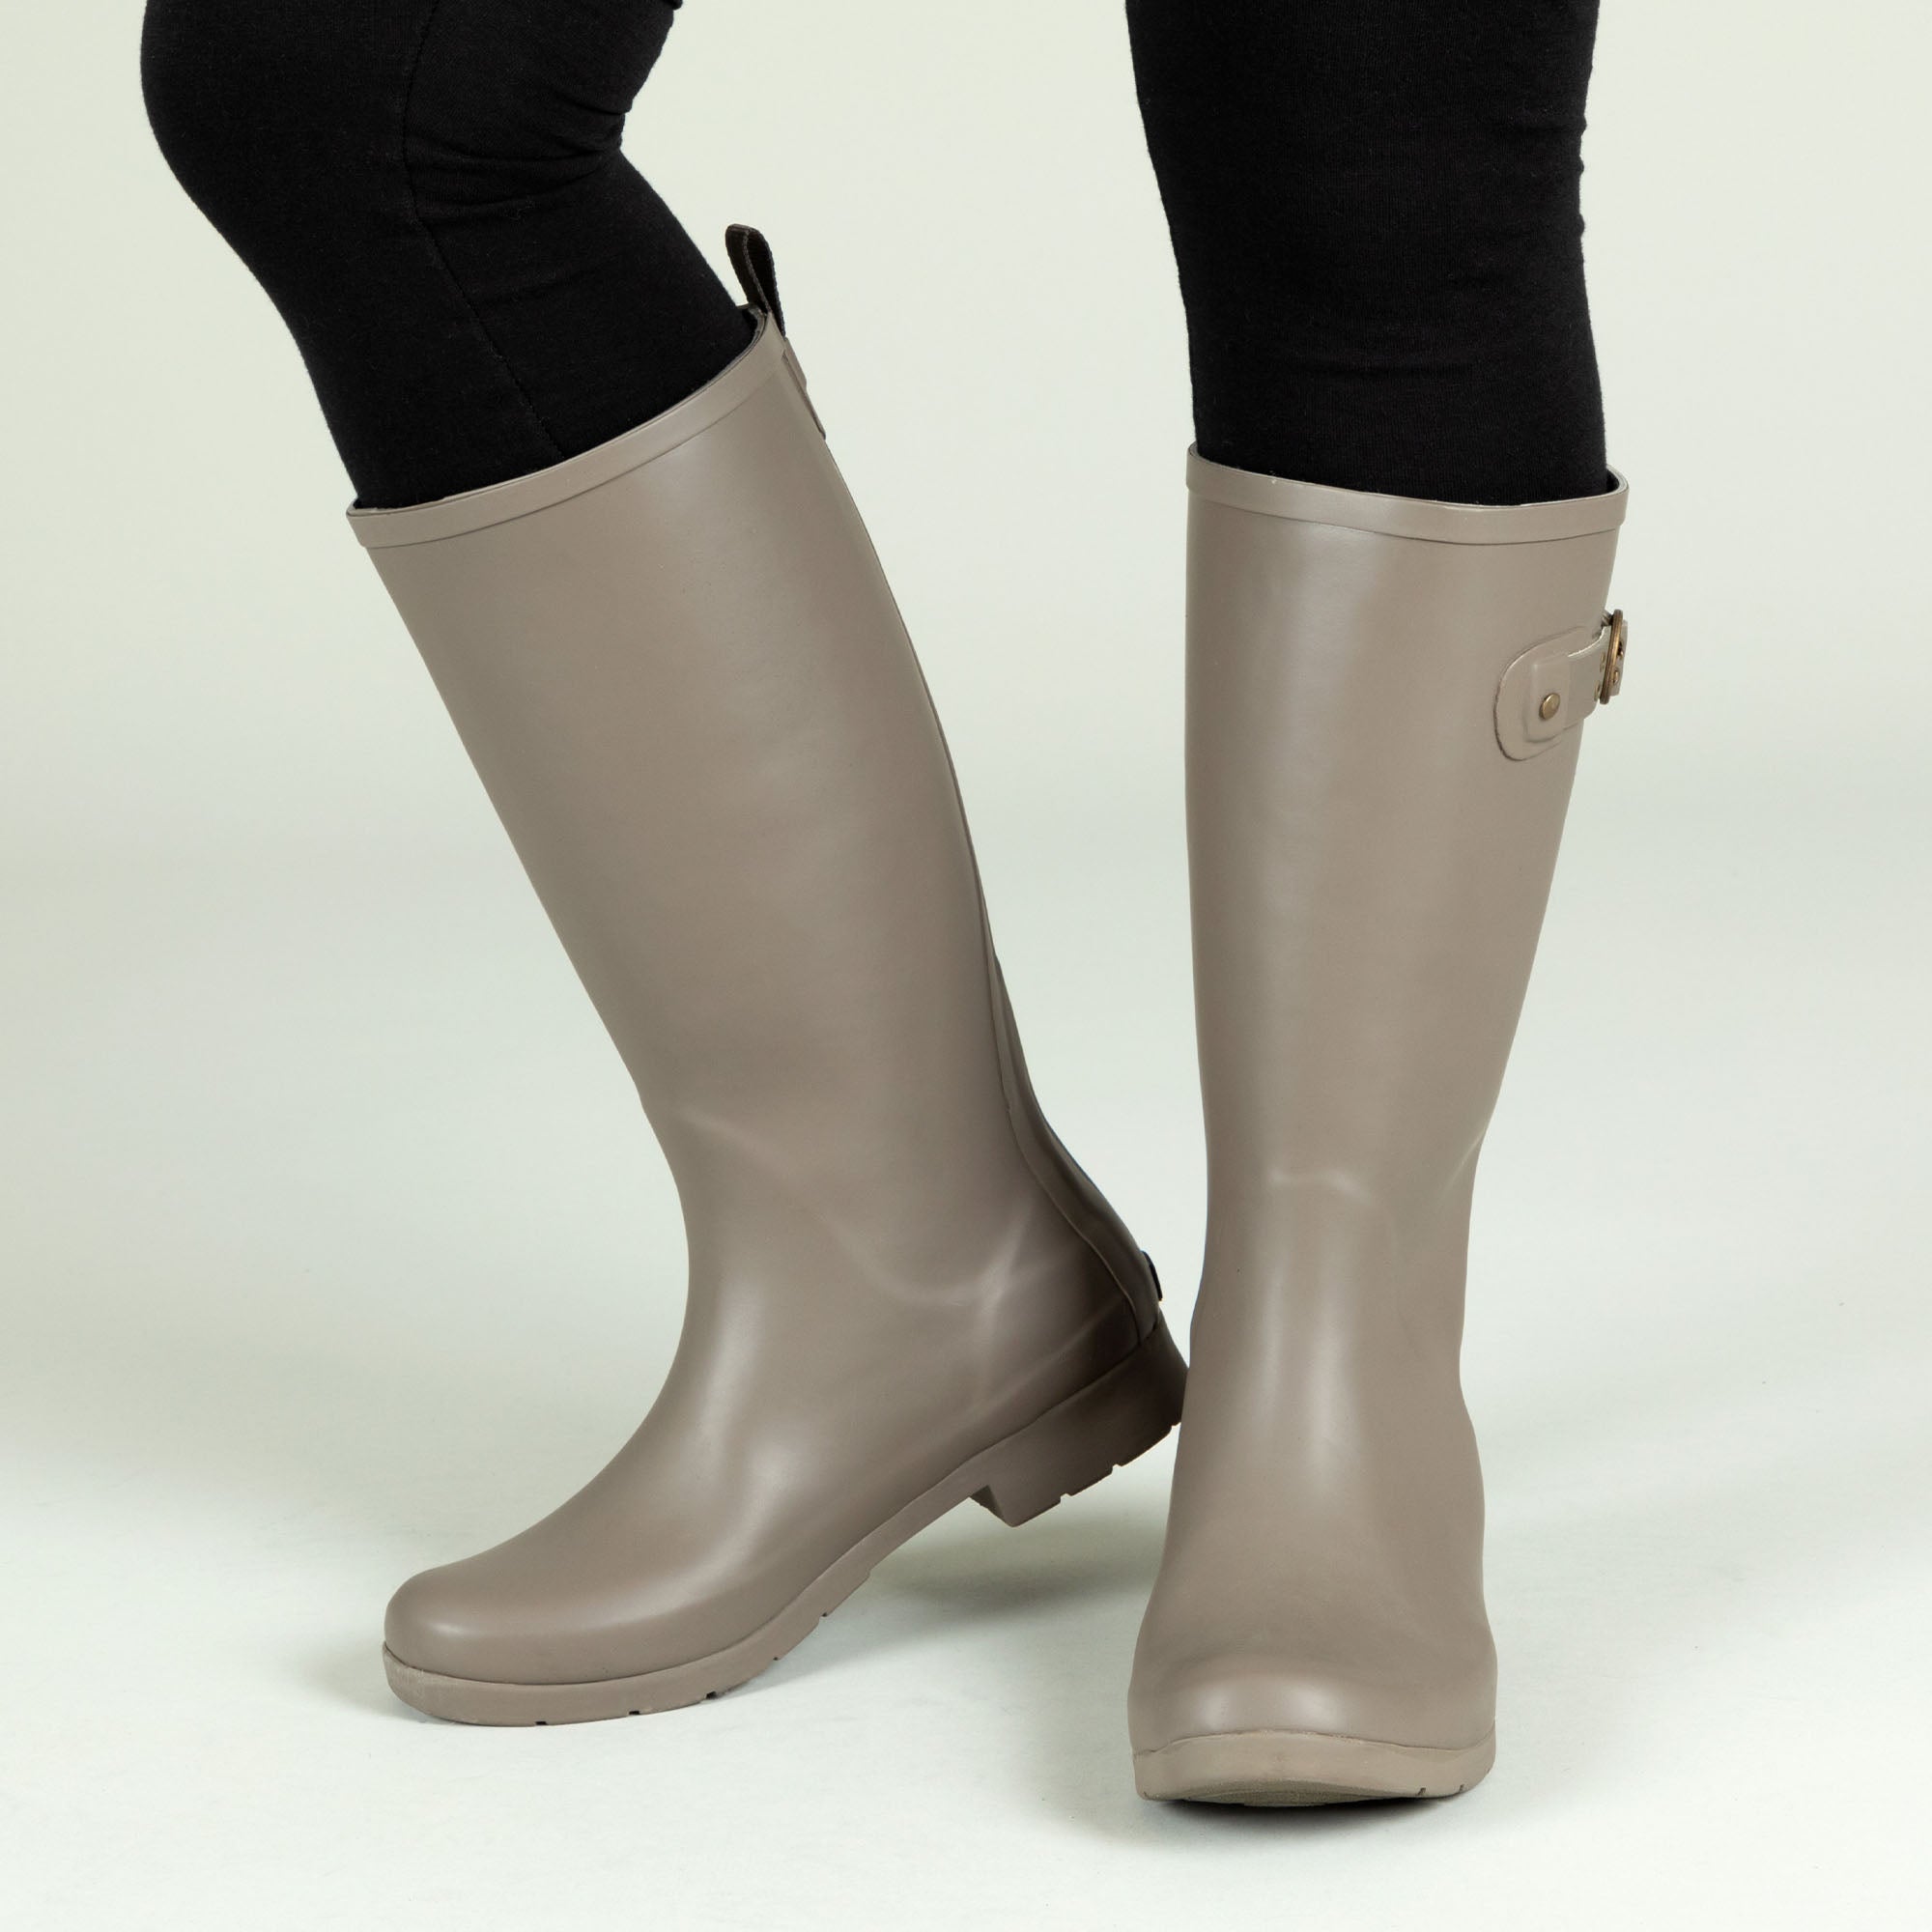 Eastlake Classic Tall Rain Boots - Taupe - 8